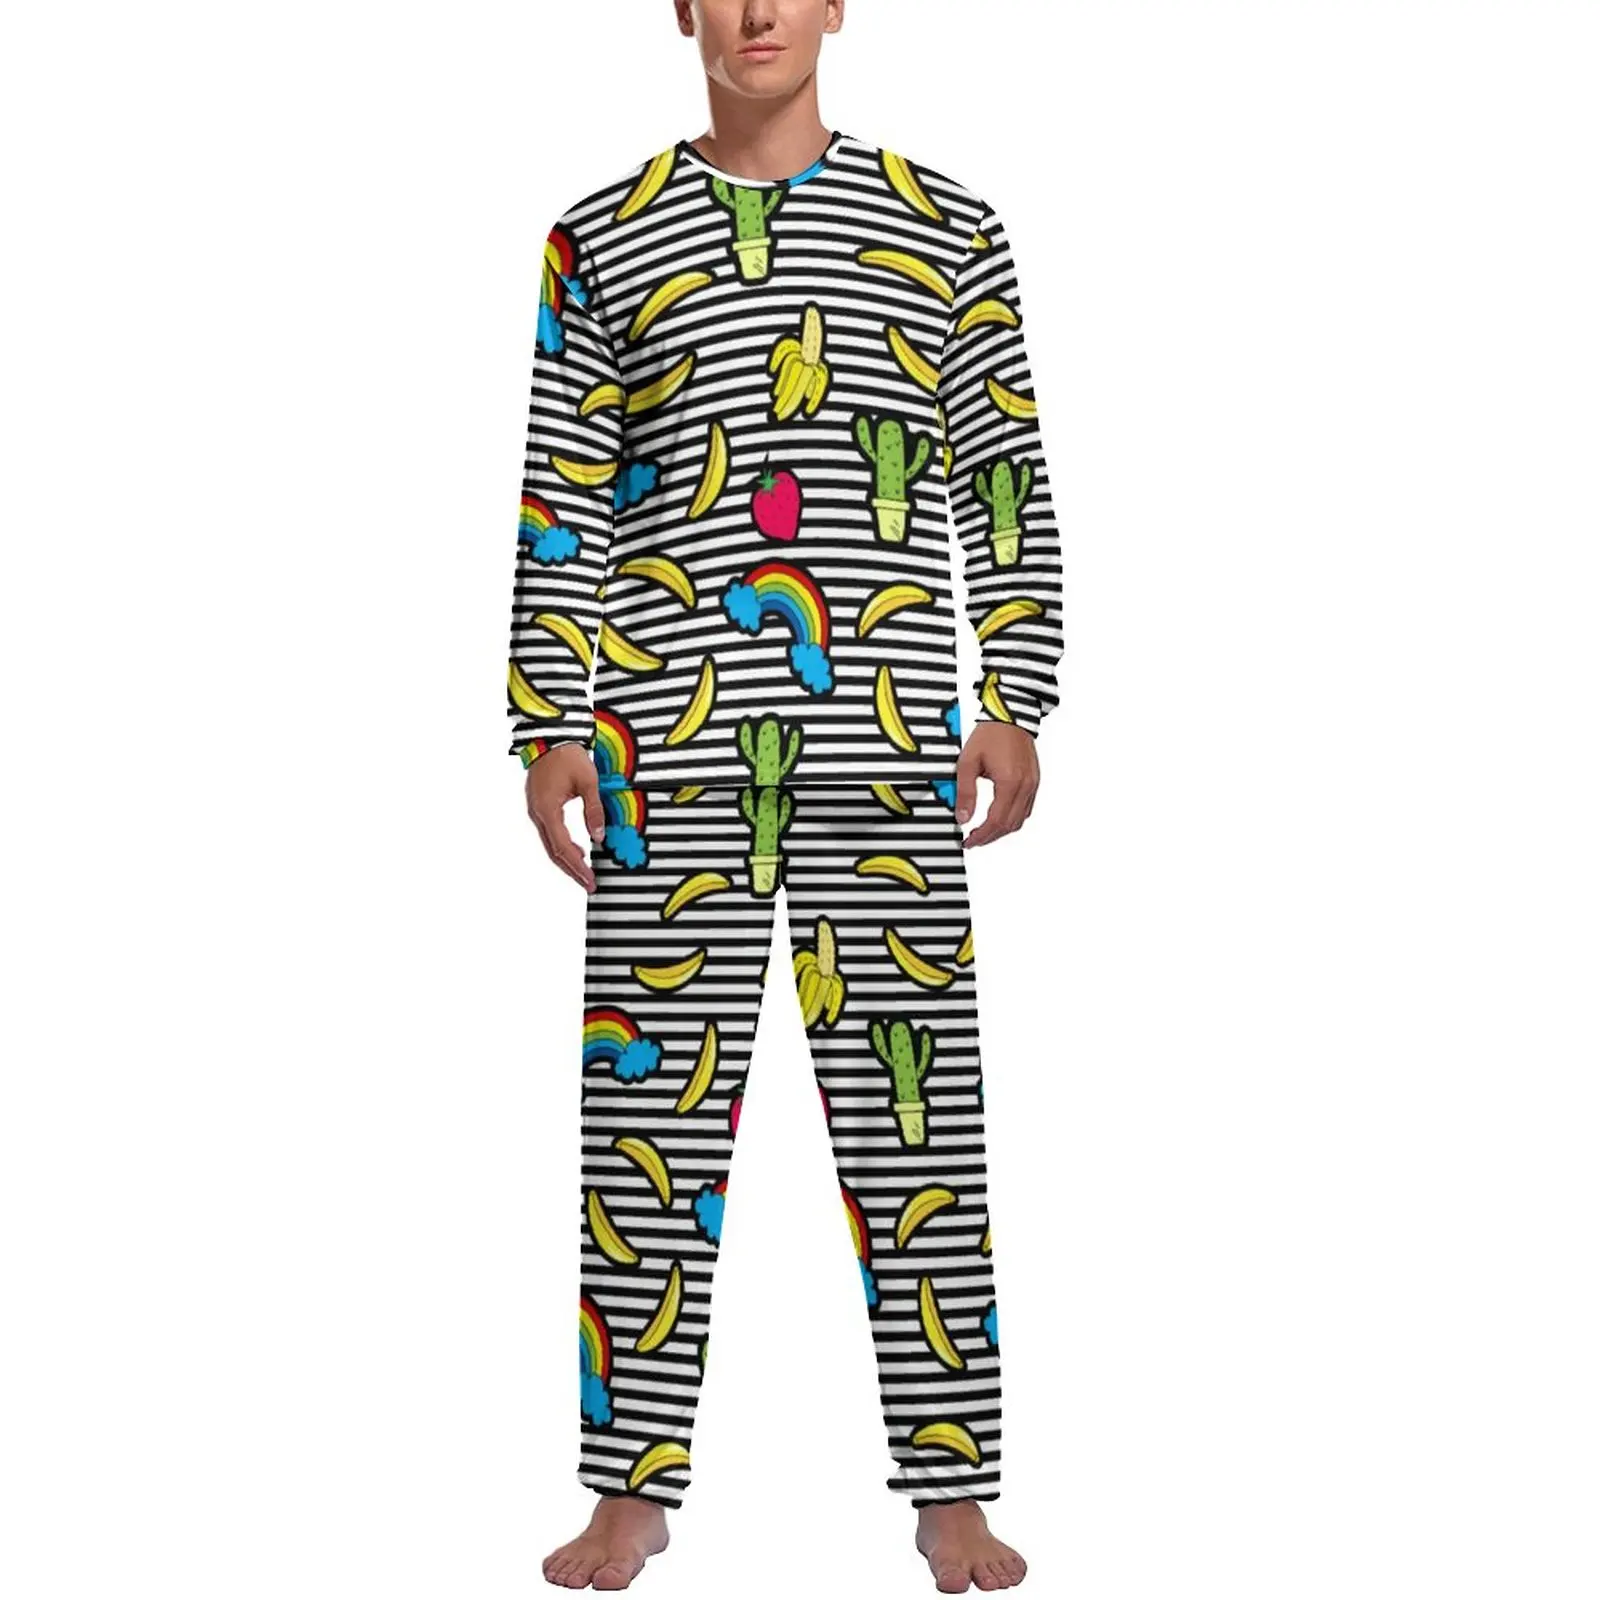 Cactus Rainbow Fruit Pajamas Long Sleeve Black White Stripes Two Piece Home Pajamas Set Winter Male Graphic Soft Home Suit